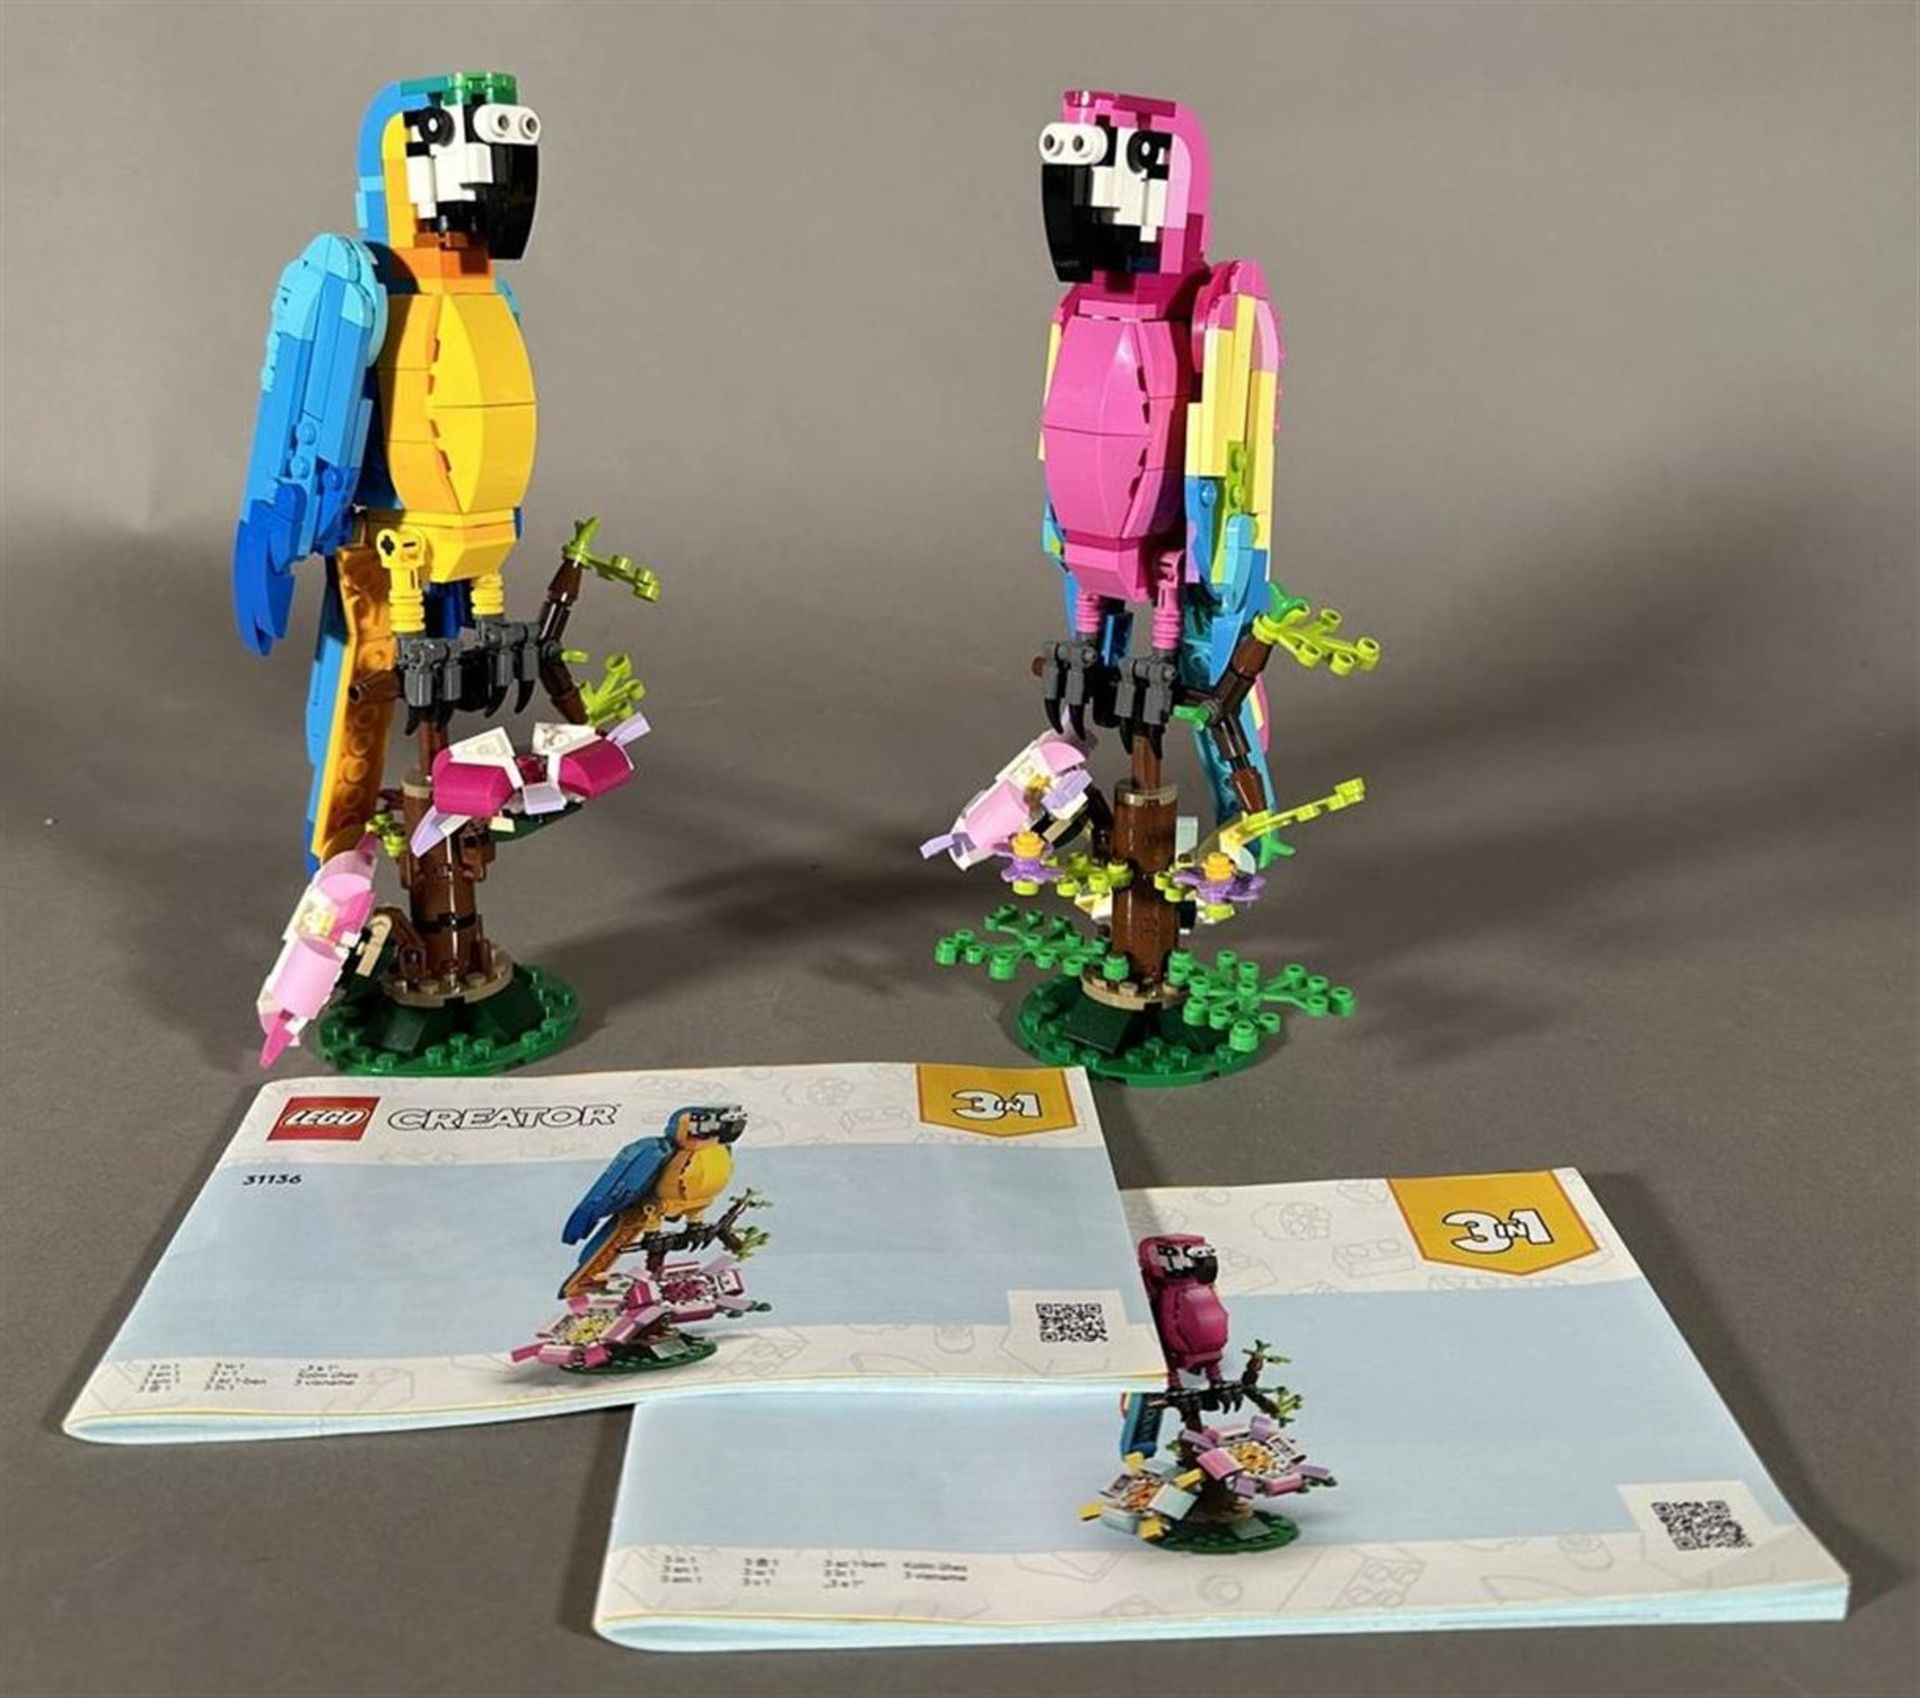 Lego creator 'blue' exotic parrot 31136; Lego creator 'pink' exotic parrot 6442319. (2x)